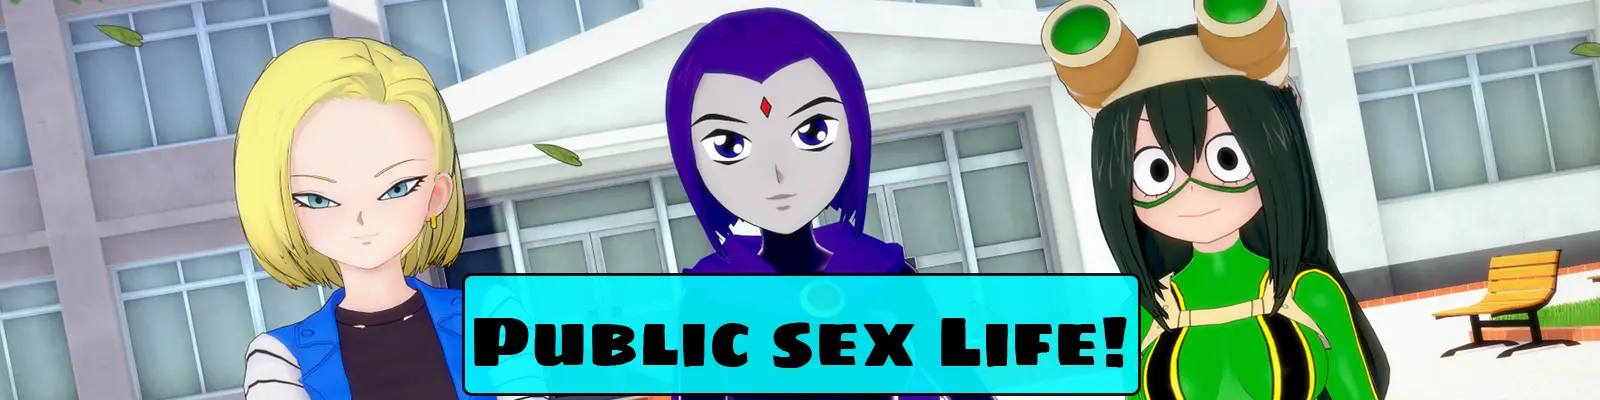 Public Sex Life [v0.19] main image